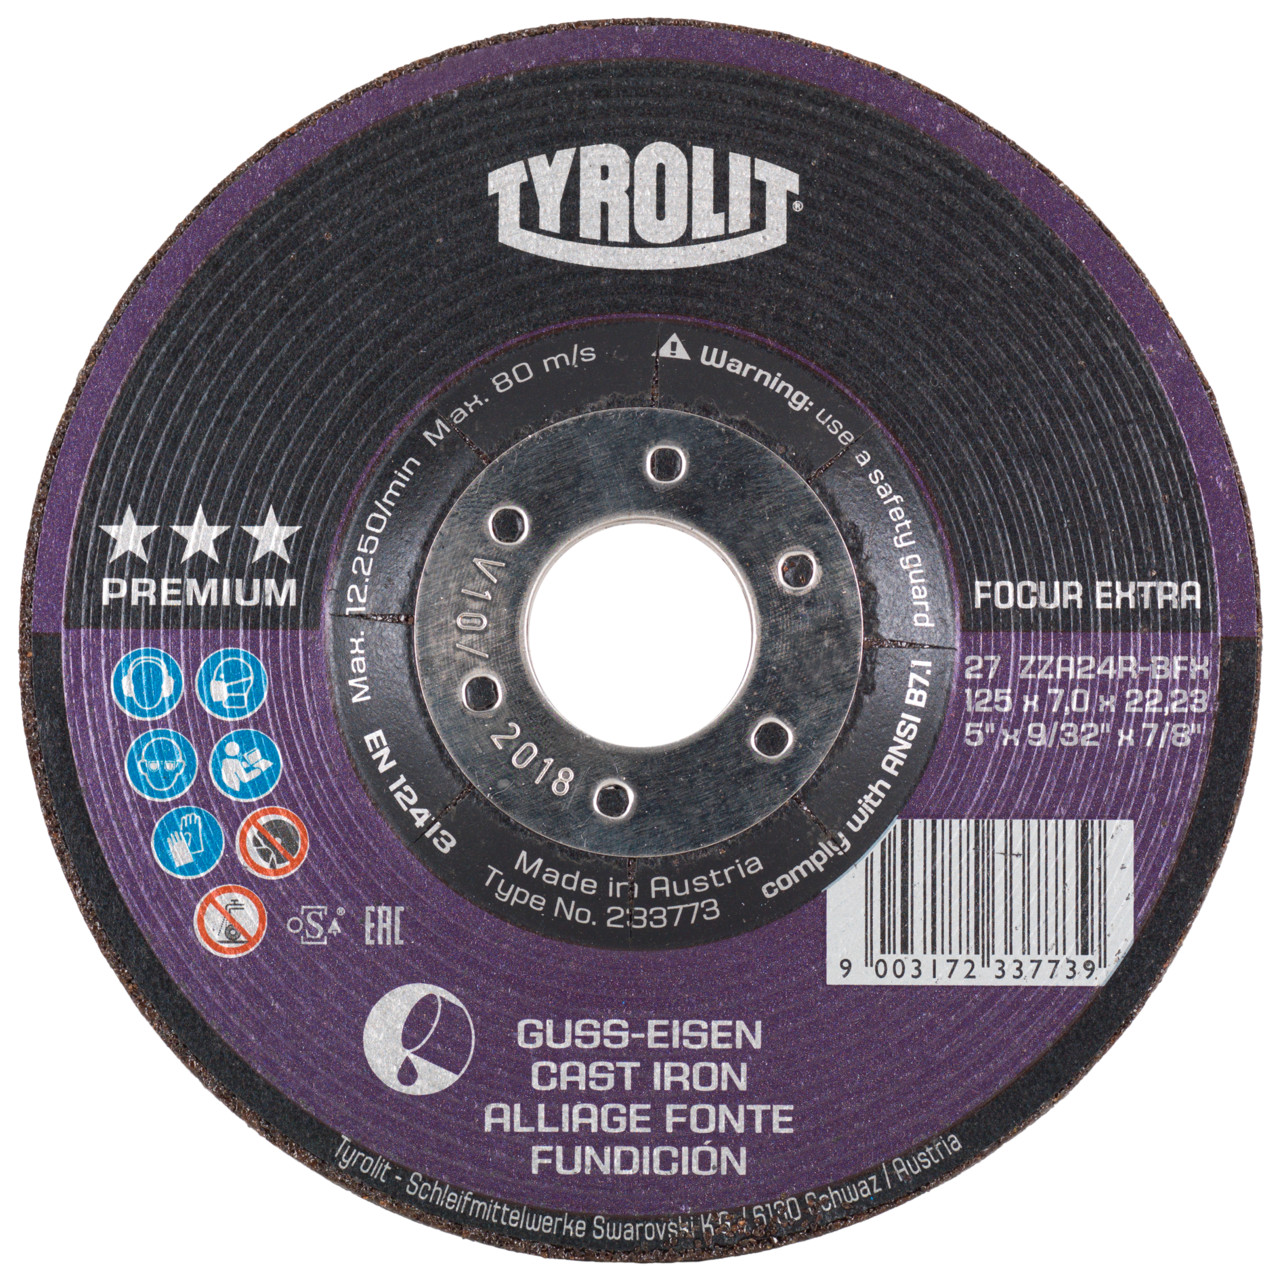 TYROLIT disco de desbaste DxUxH 178x7x22,23 FOCUR Extra para fundición gris, forma: 27 - versión offset, Art. 929018